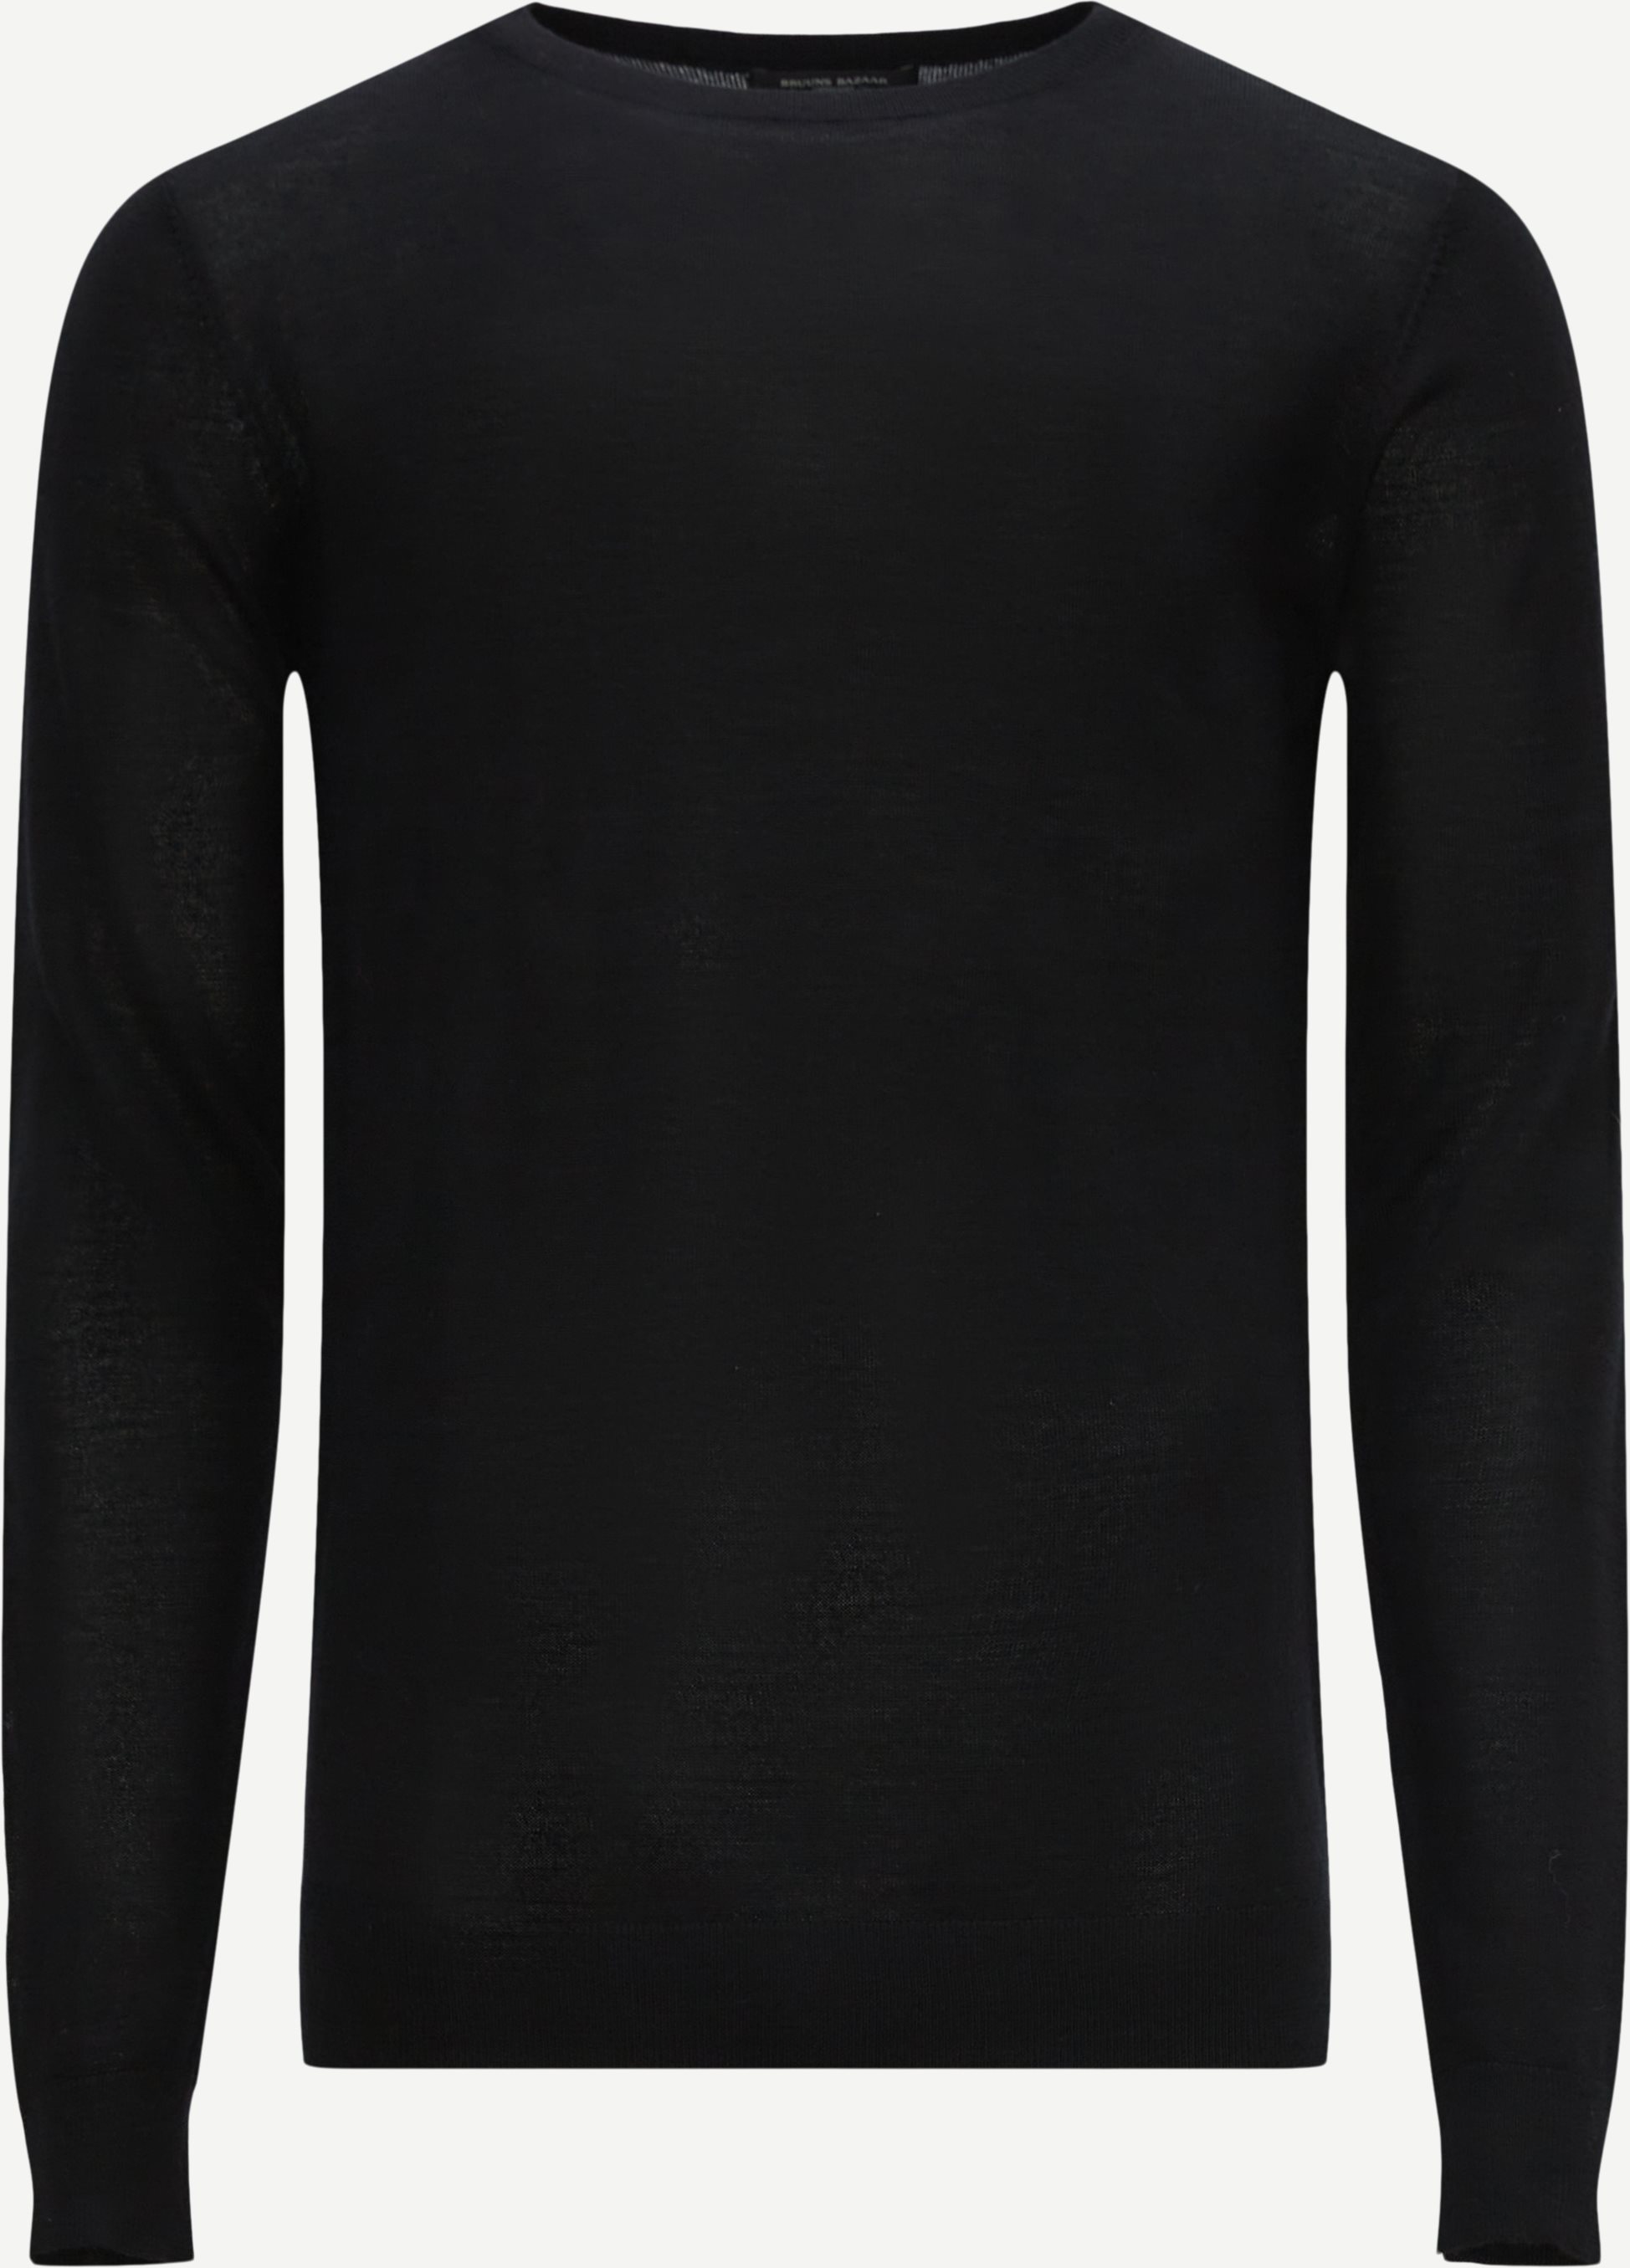 Knitwear - Regular fit - Black